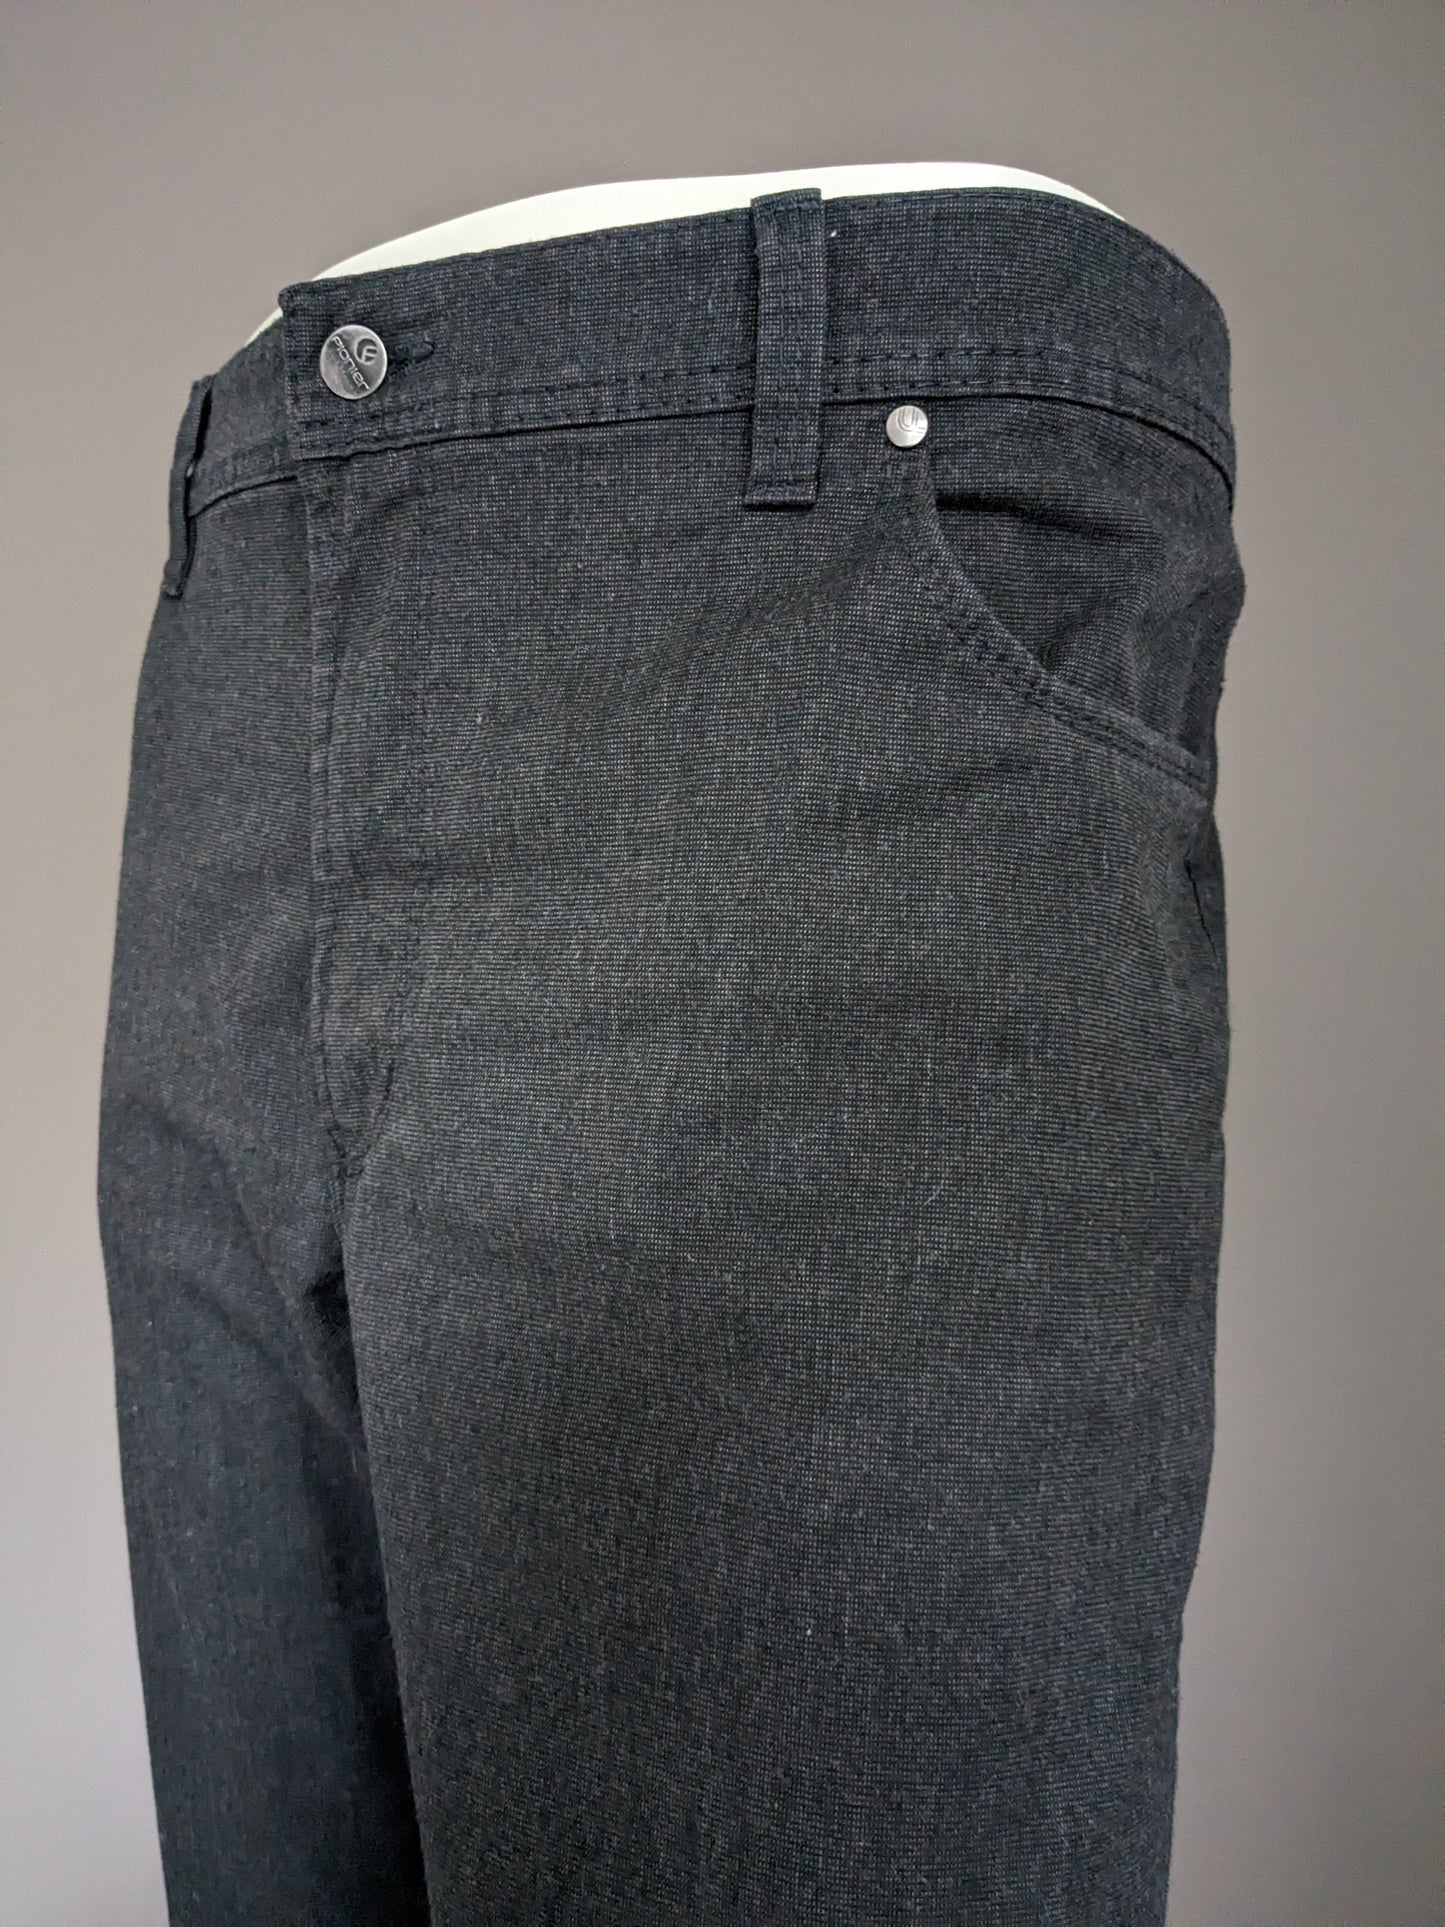 Pantalones pioneros. Motivo negro gris. Tamaño 58 / xl. Escriba Thomas.